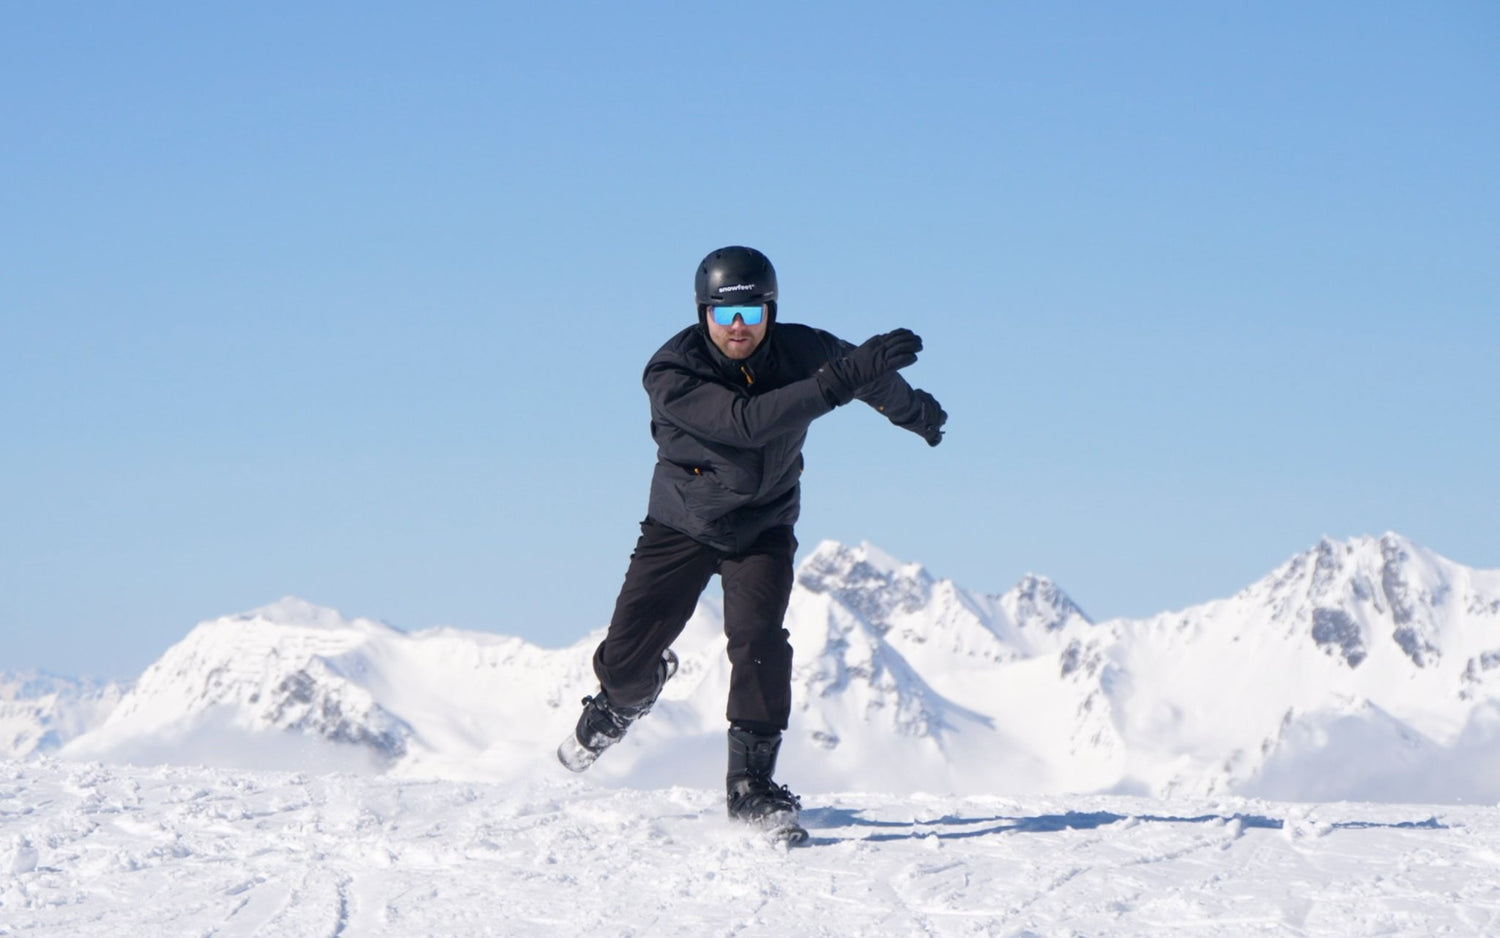 Skating on Snow and the Perfect Short Skis for Skiskating - snowfeet*